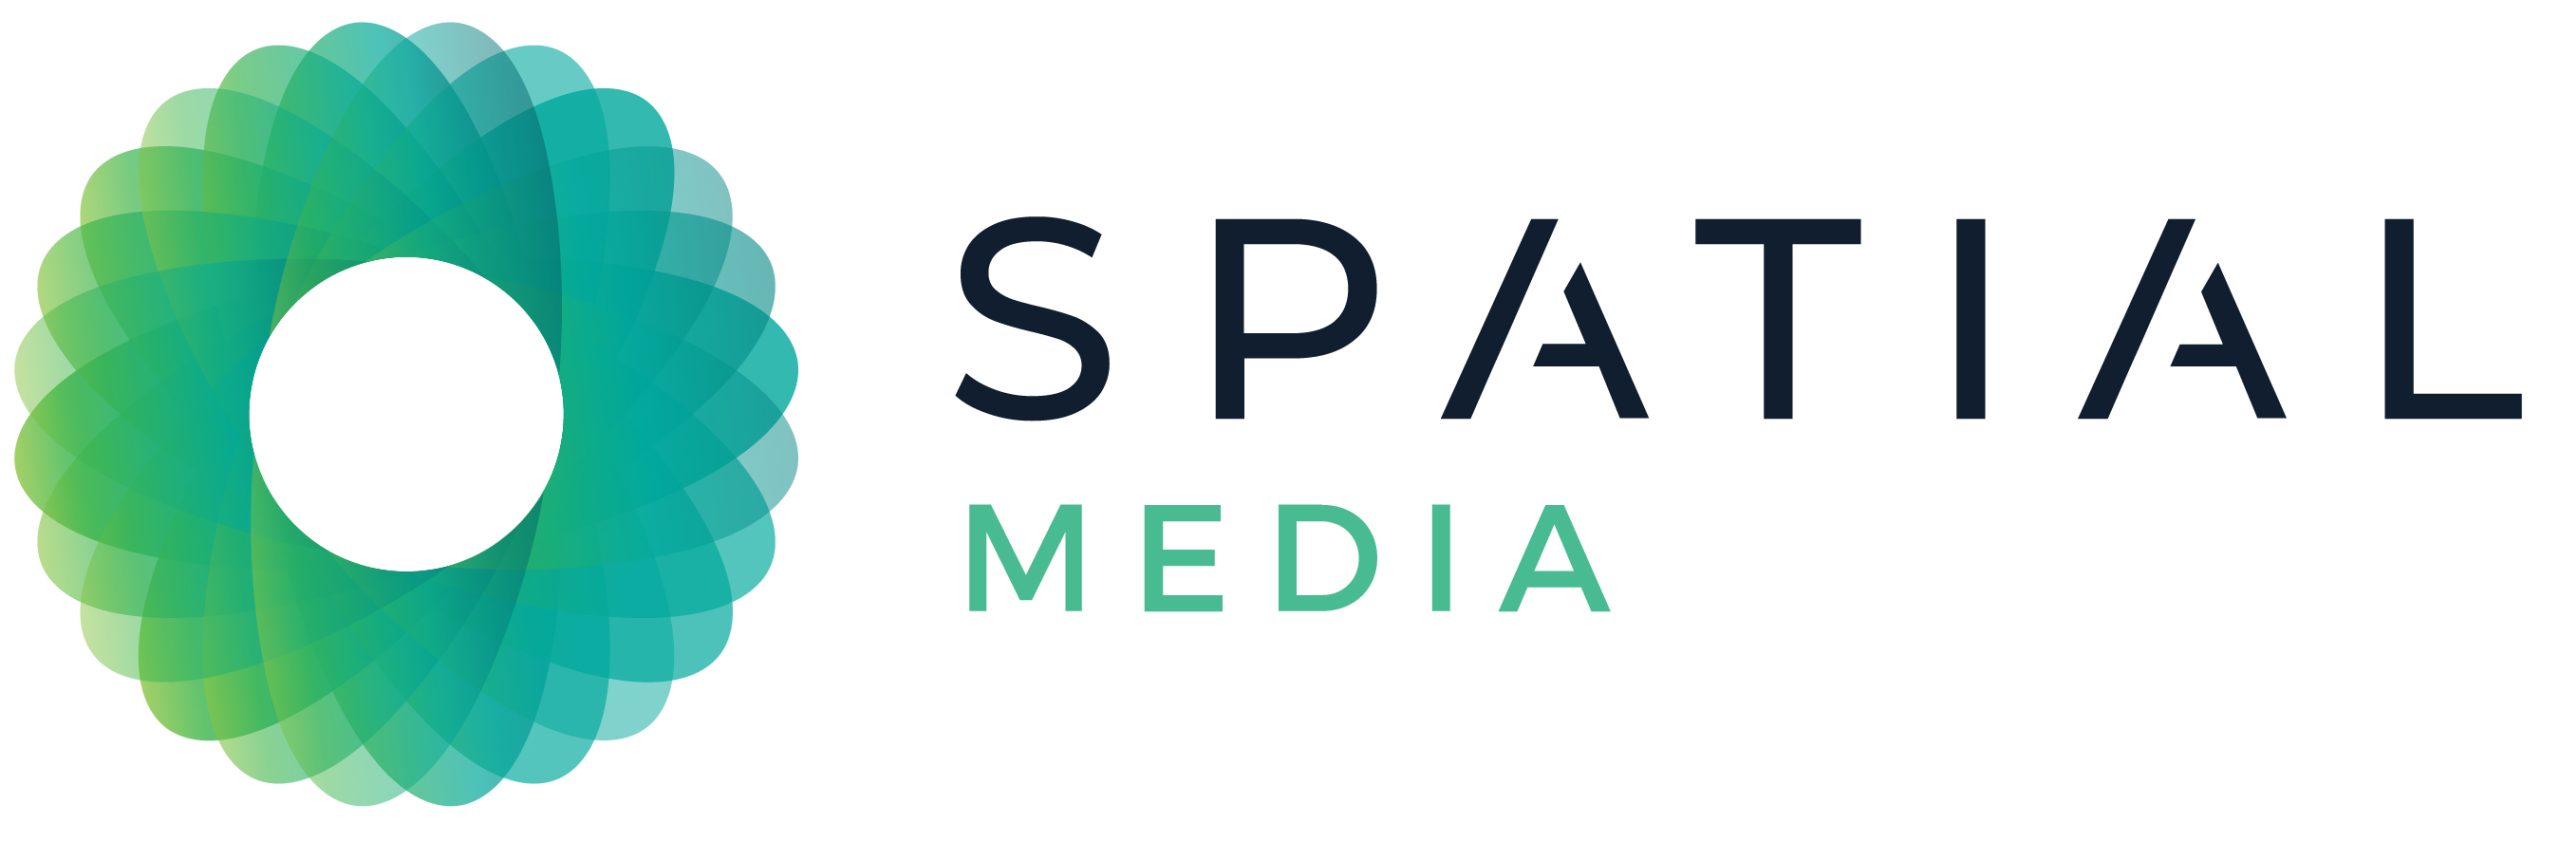 Spatial Media Logo